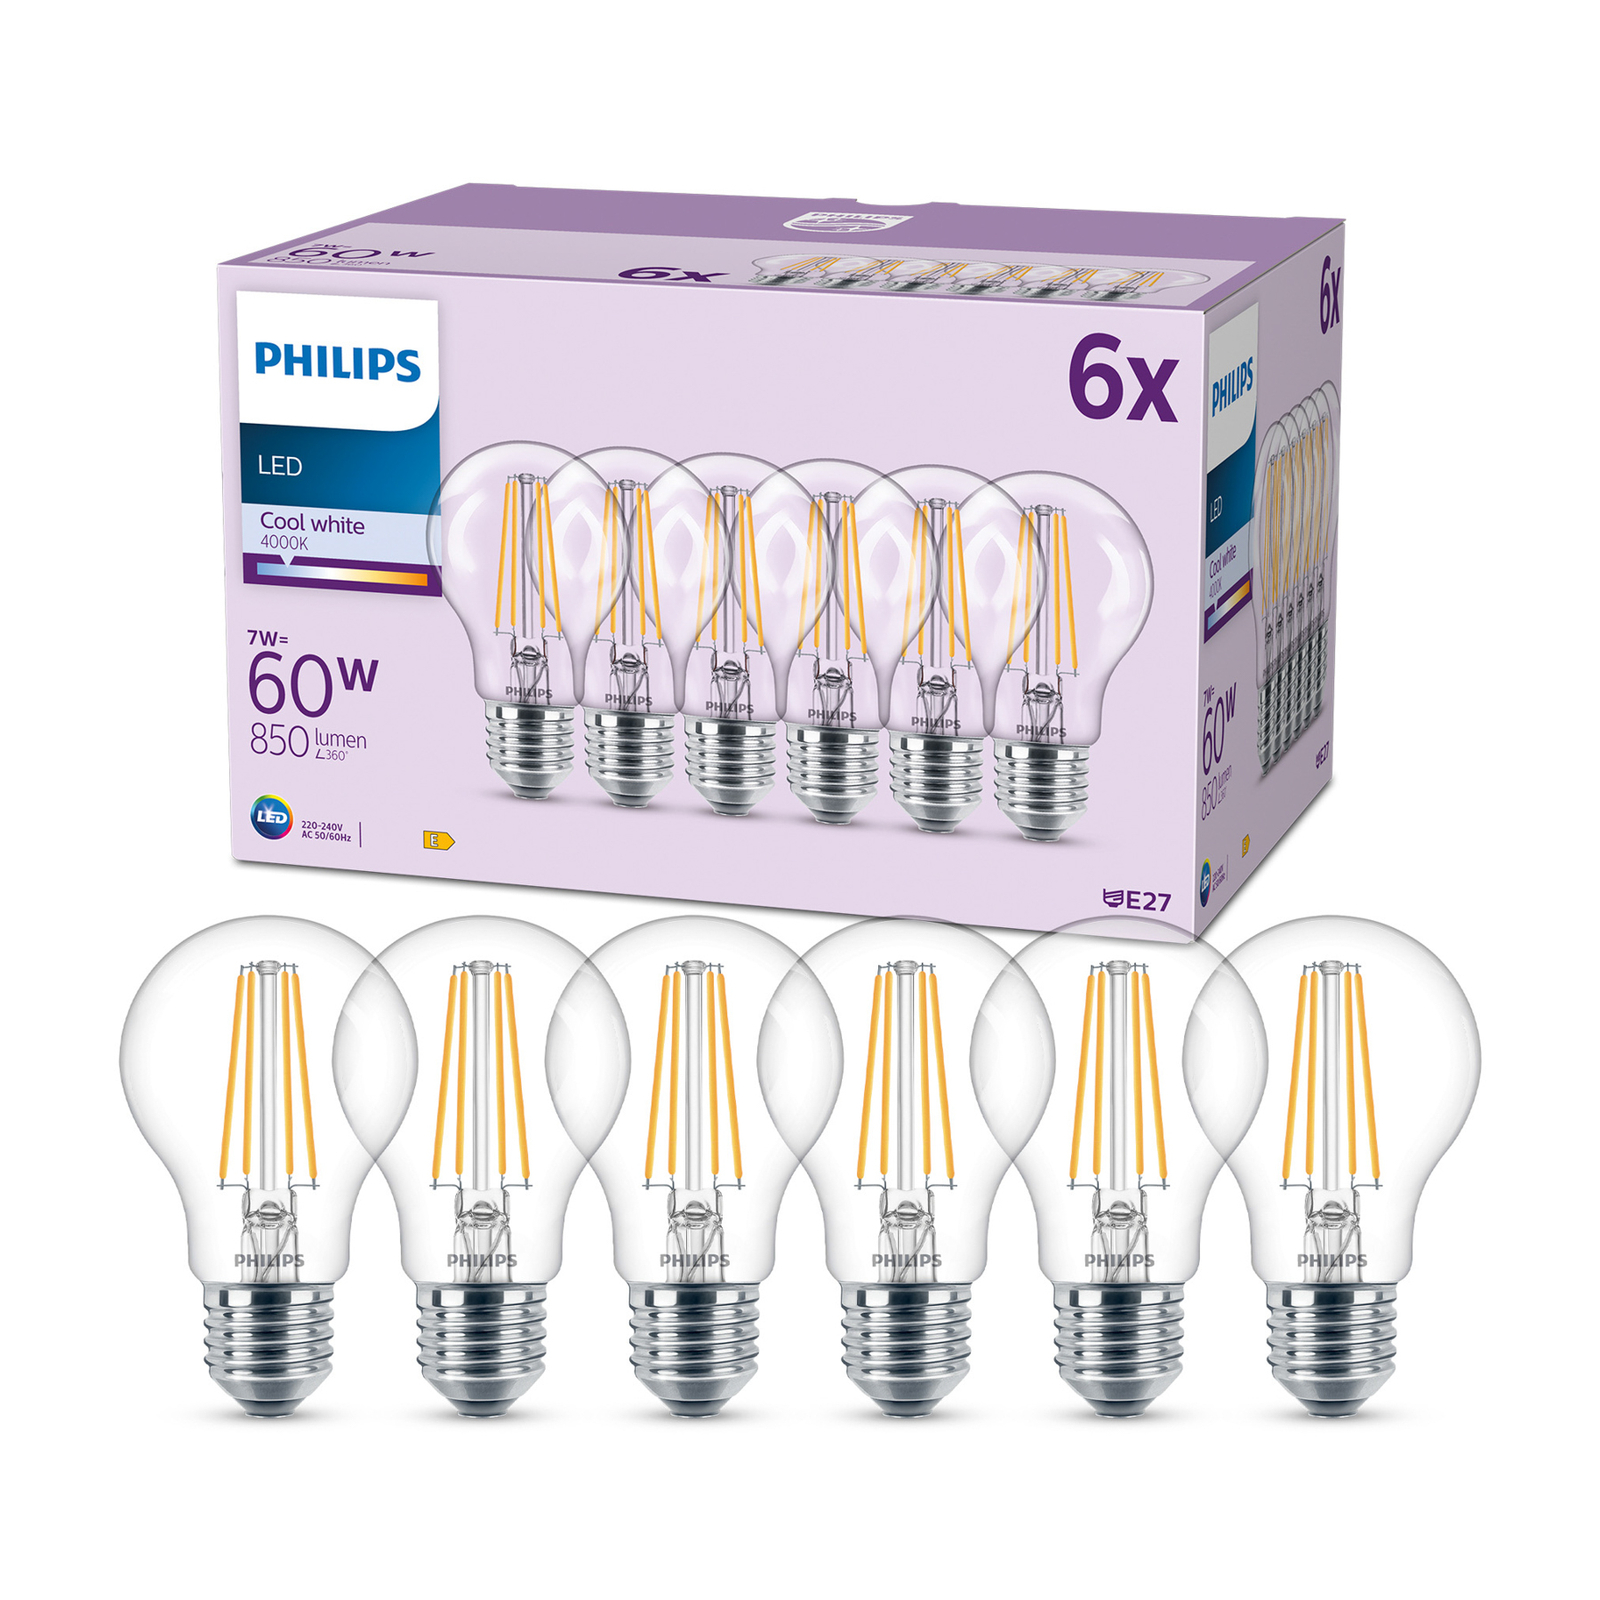 Philips LED bulb E27 7W 850lm 4,000K clear 6-pack